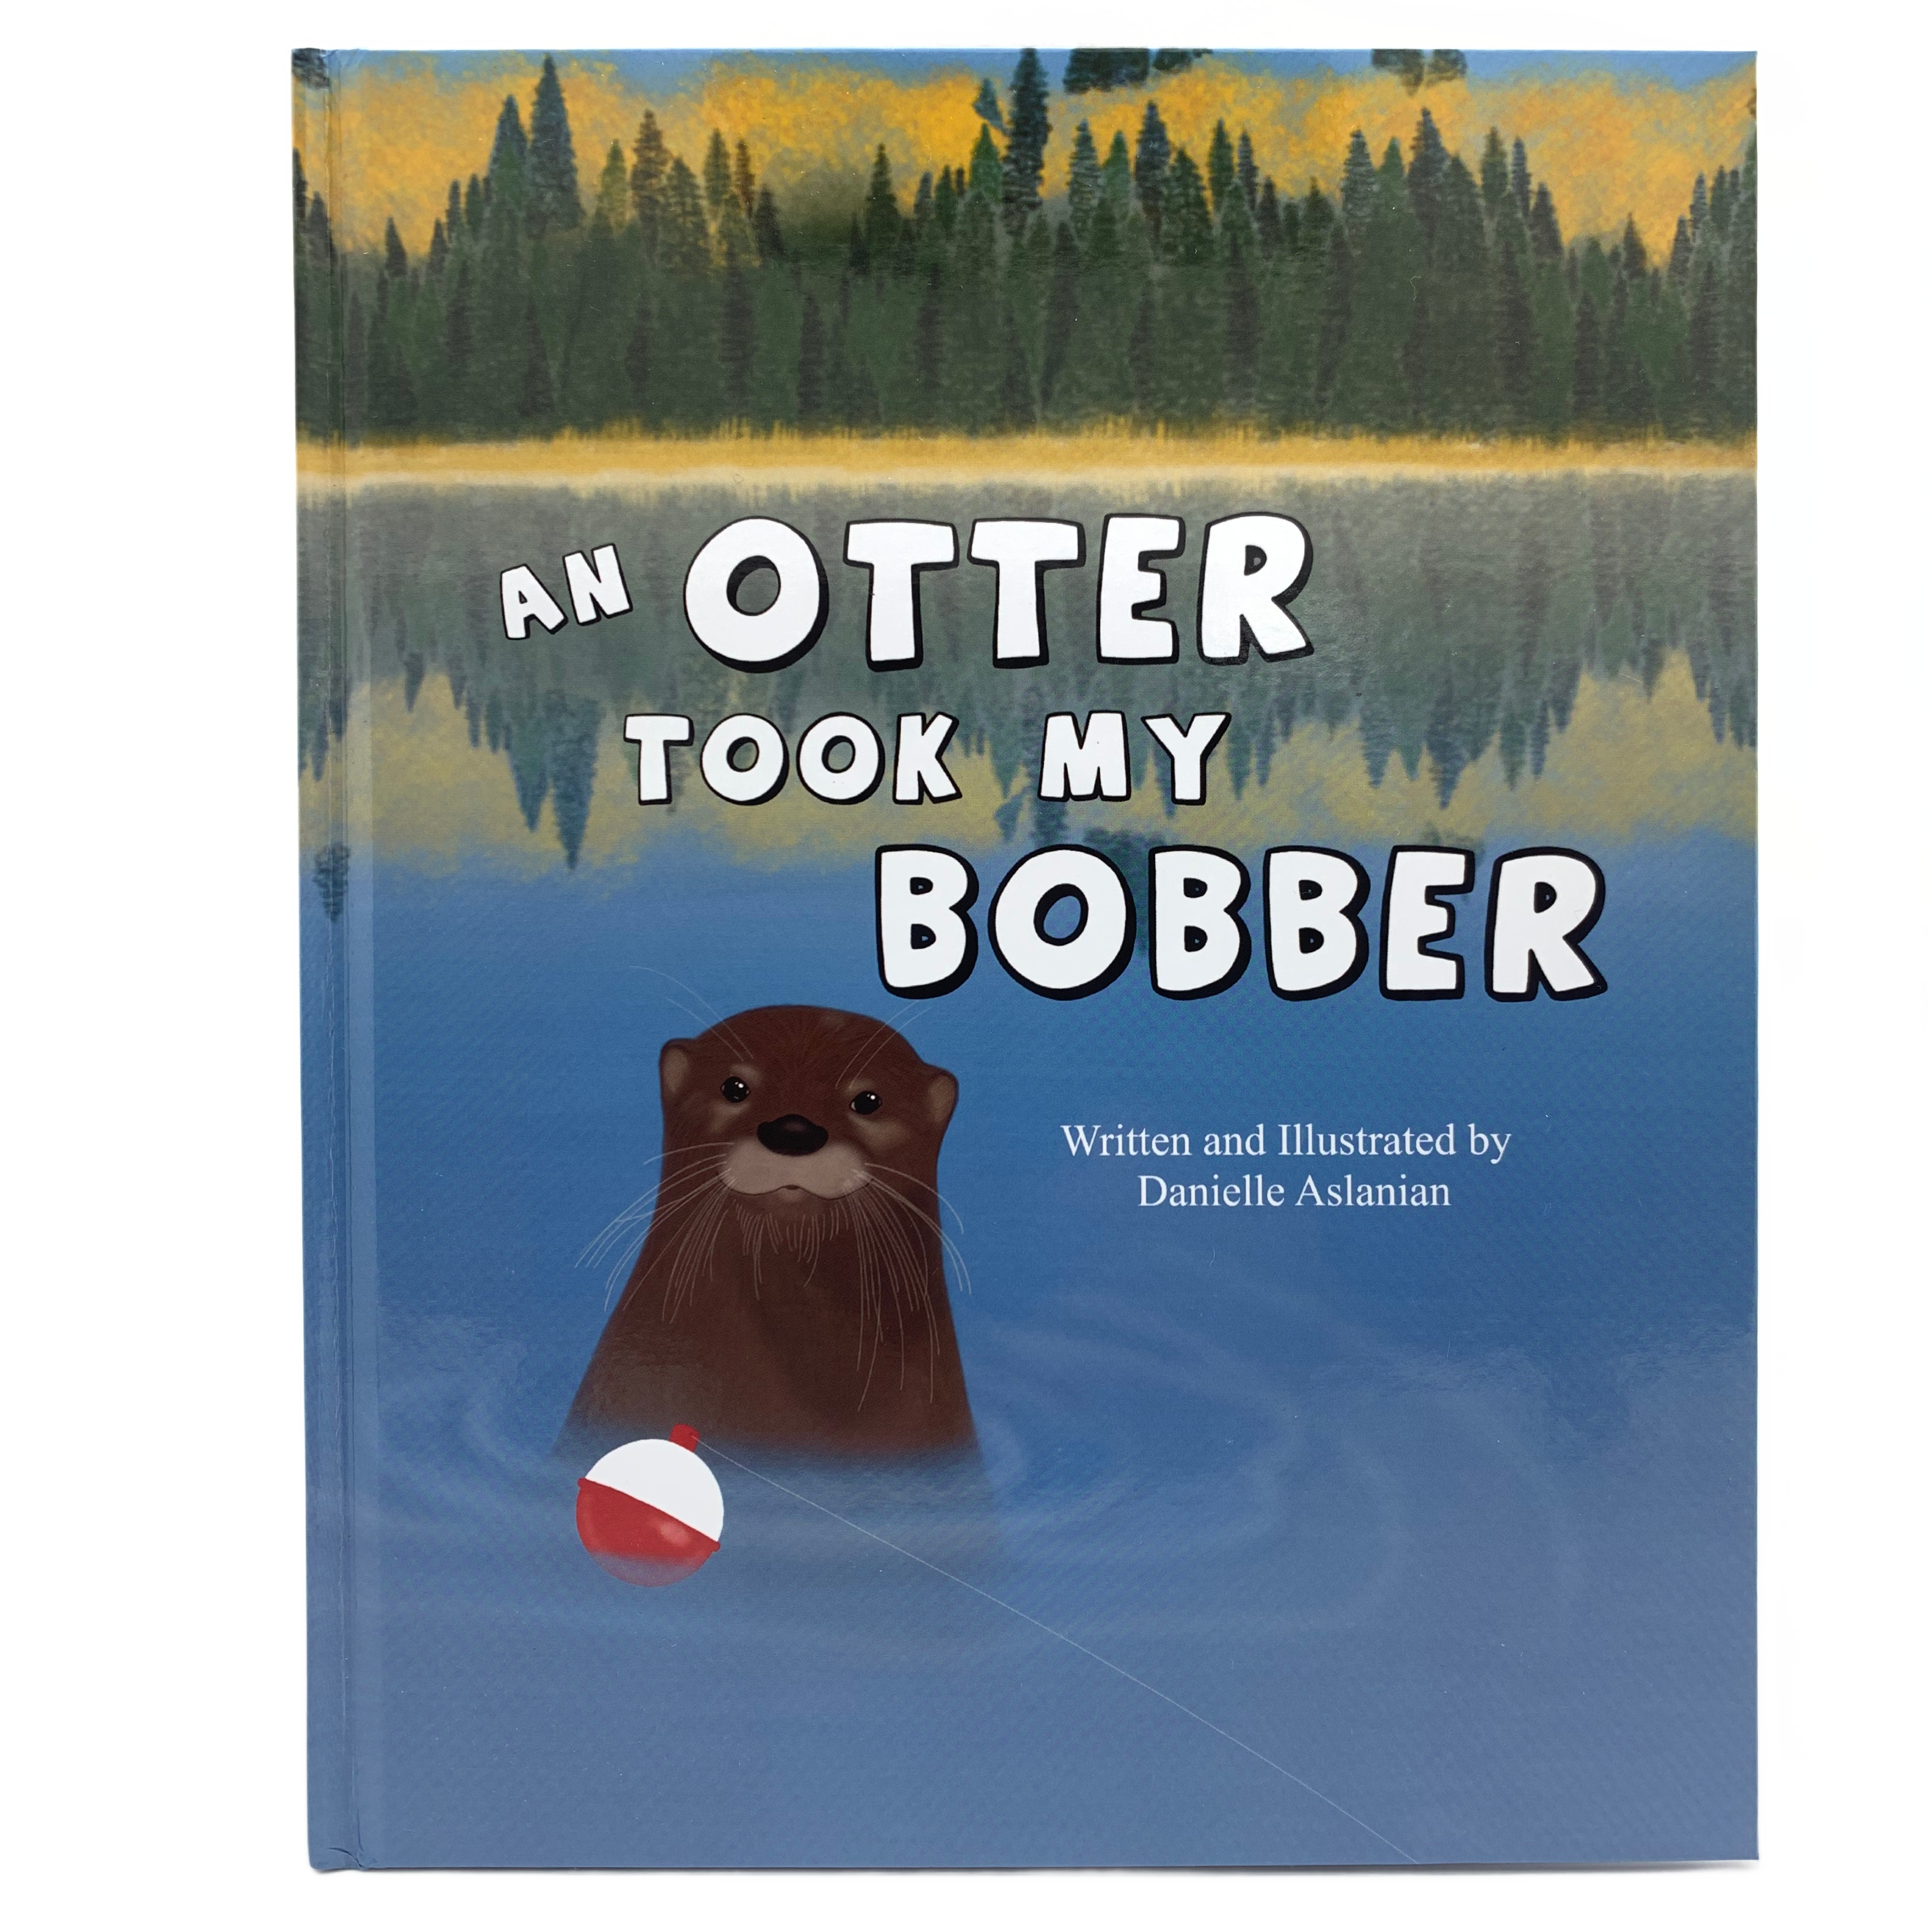 An Otter Took My Bobber by Danielle Aslanian